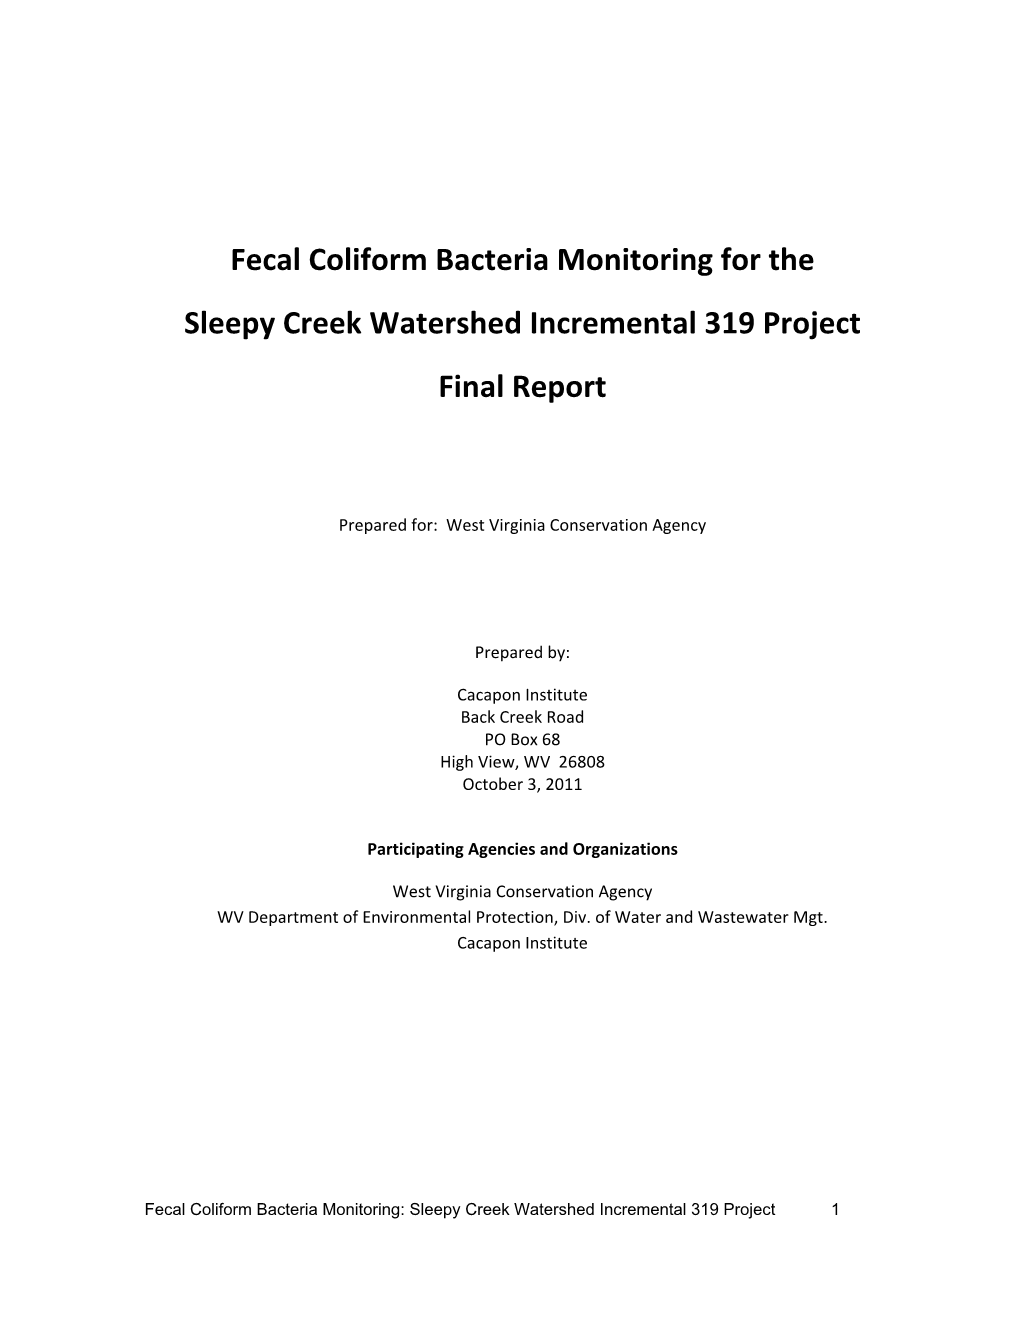 Sleepy Creek Fecal Coliform Bacteria Monitoring 2010-2011